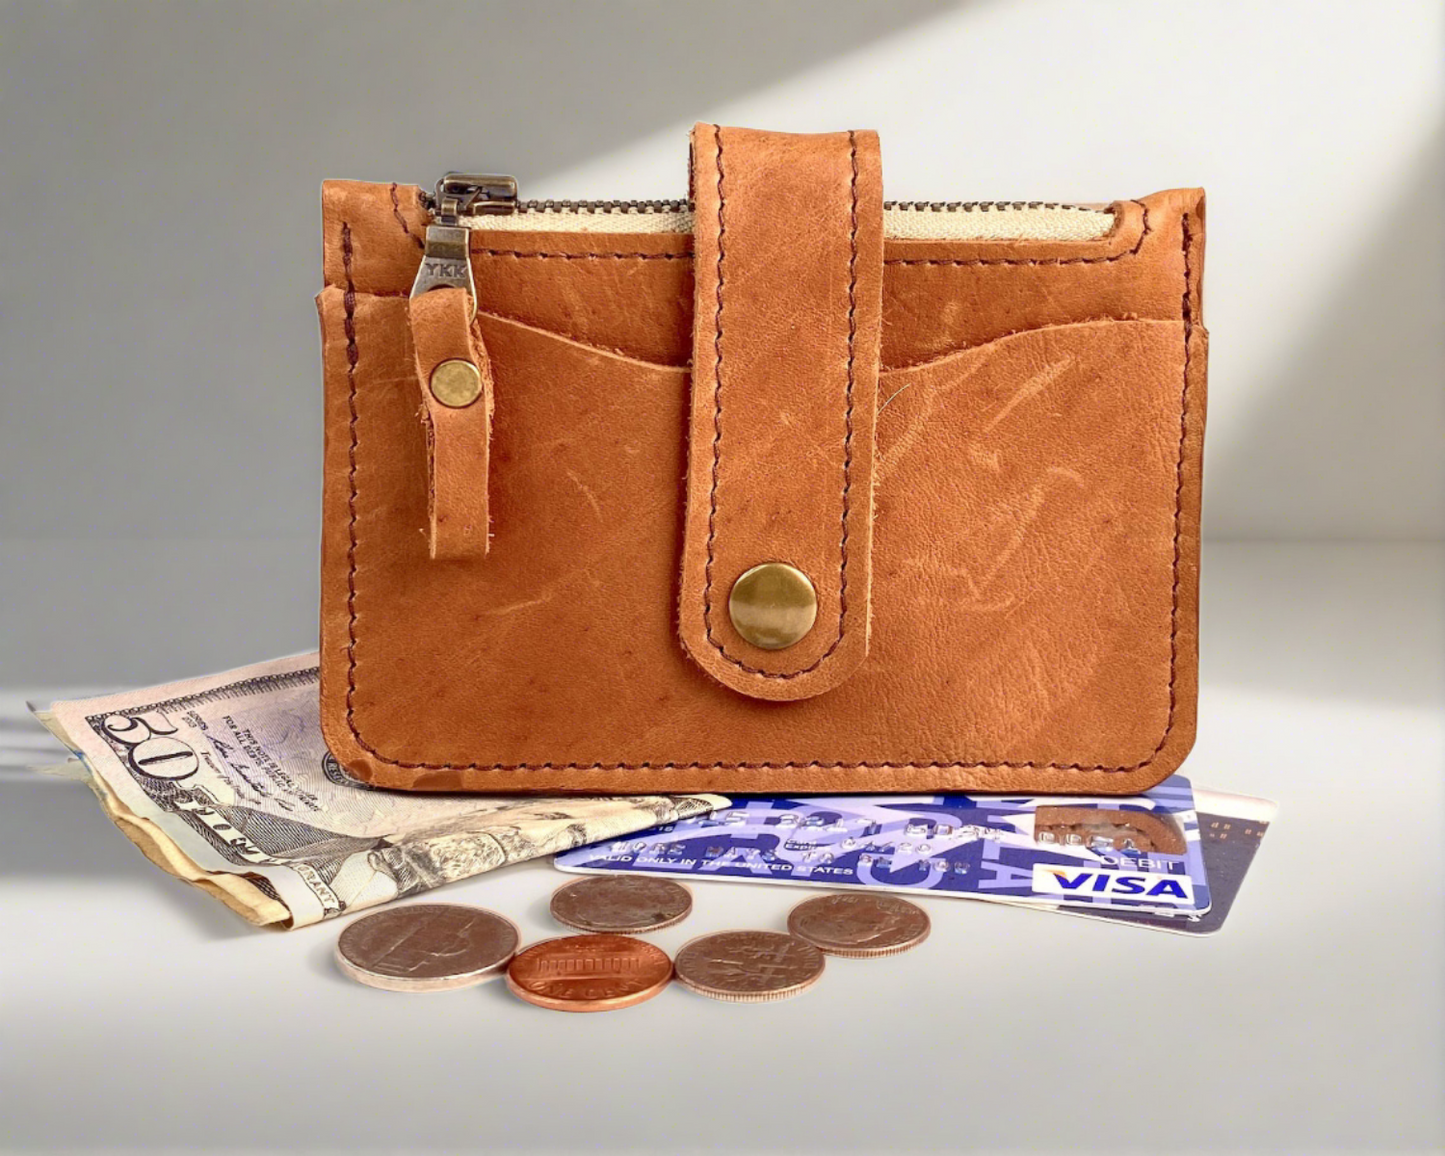 CardGuard Minimalist Leather Wallet in Tan